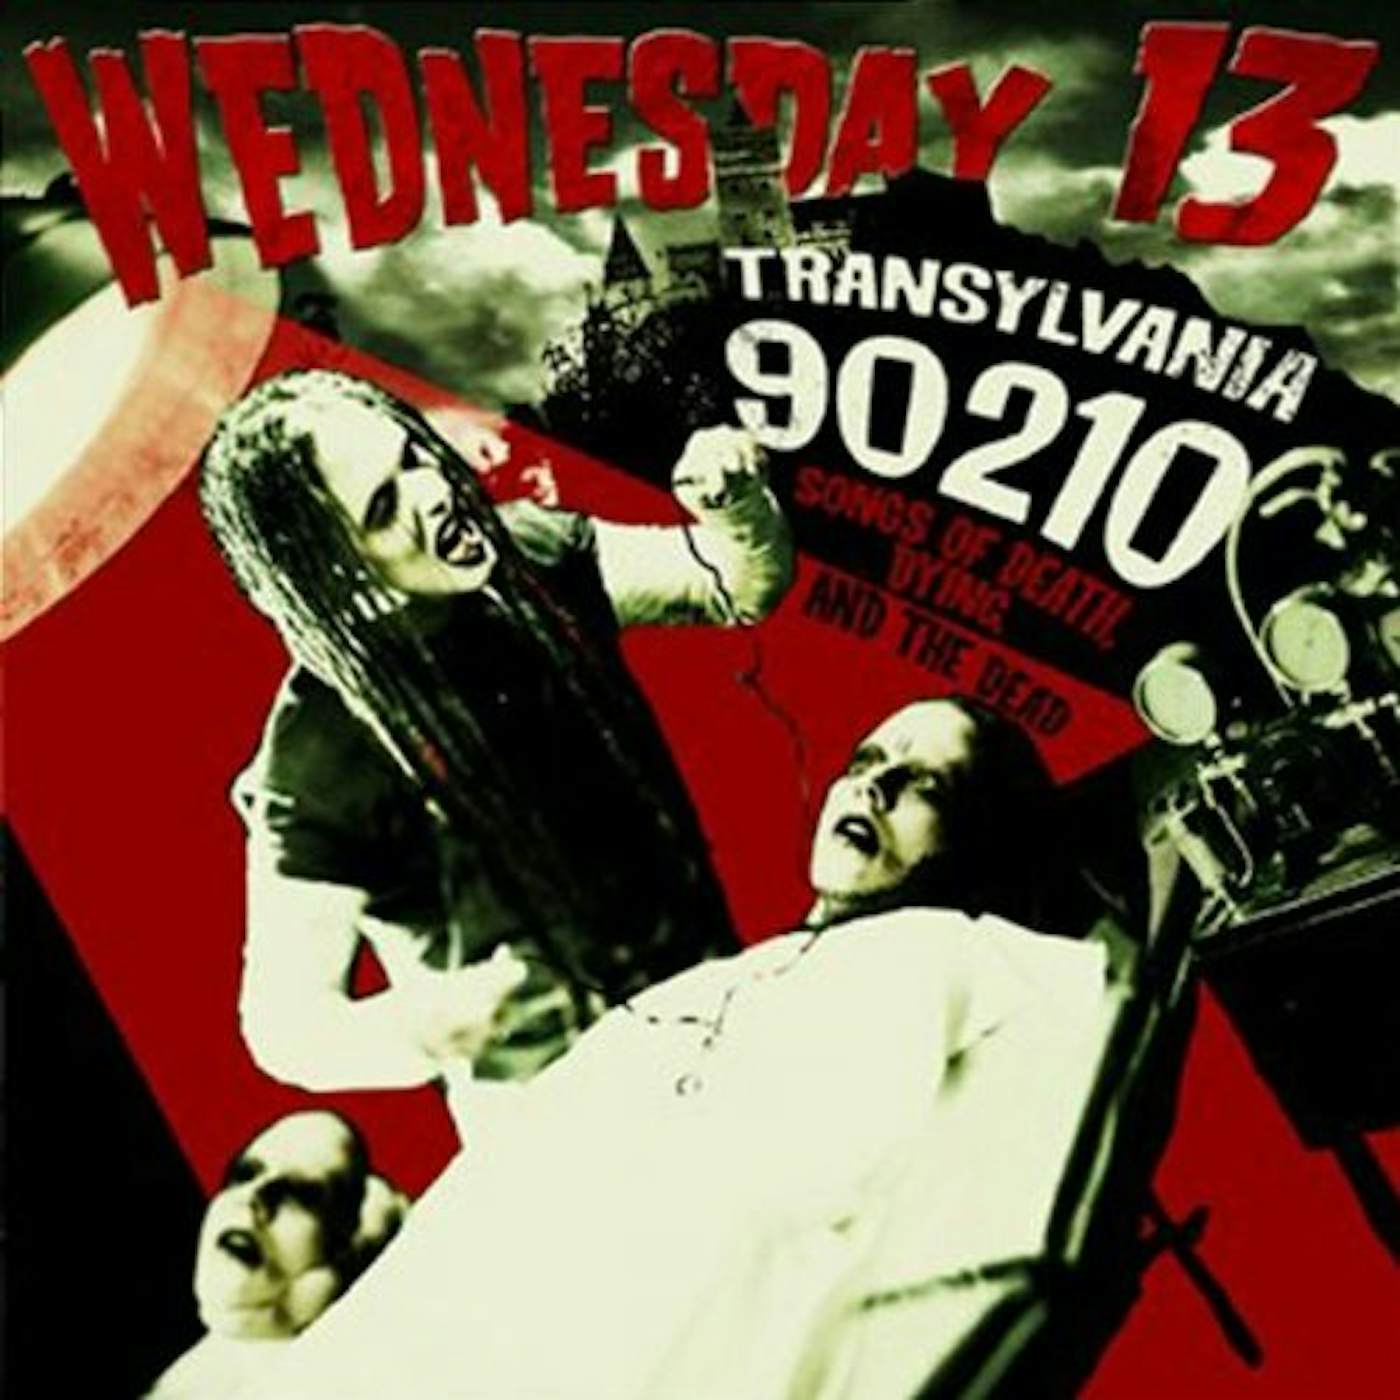 Wednesday 13 Transylvania 90210